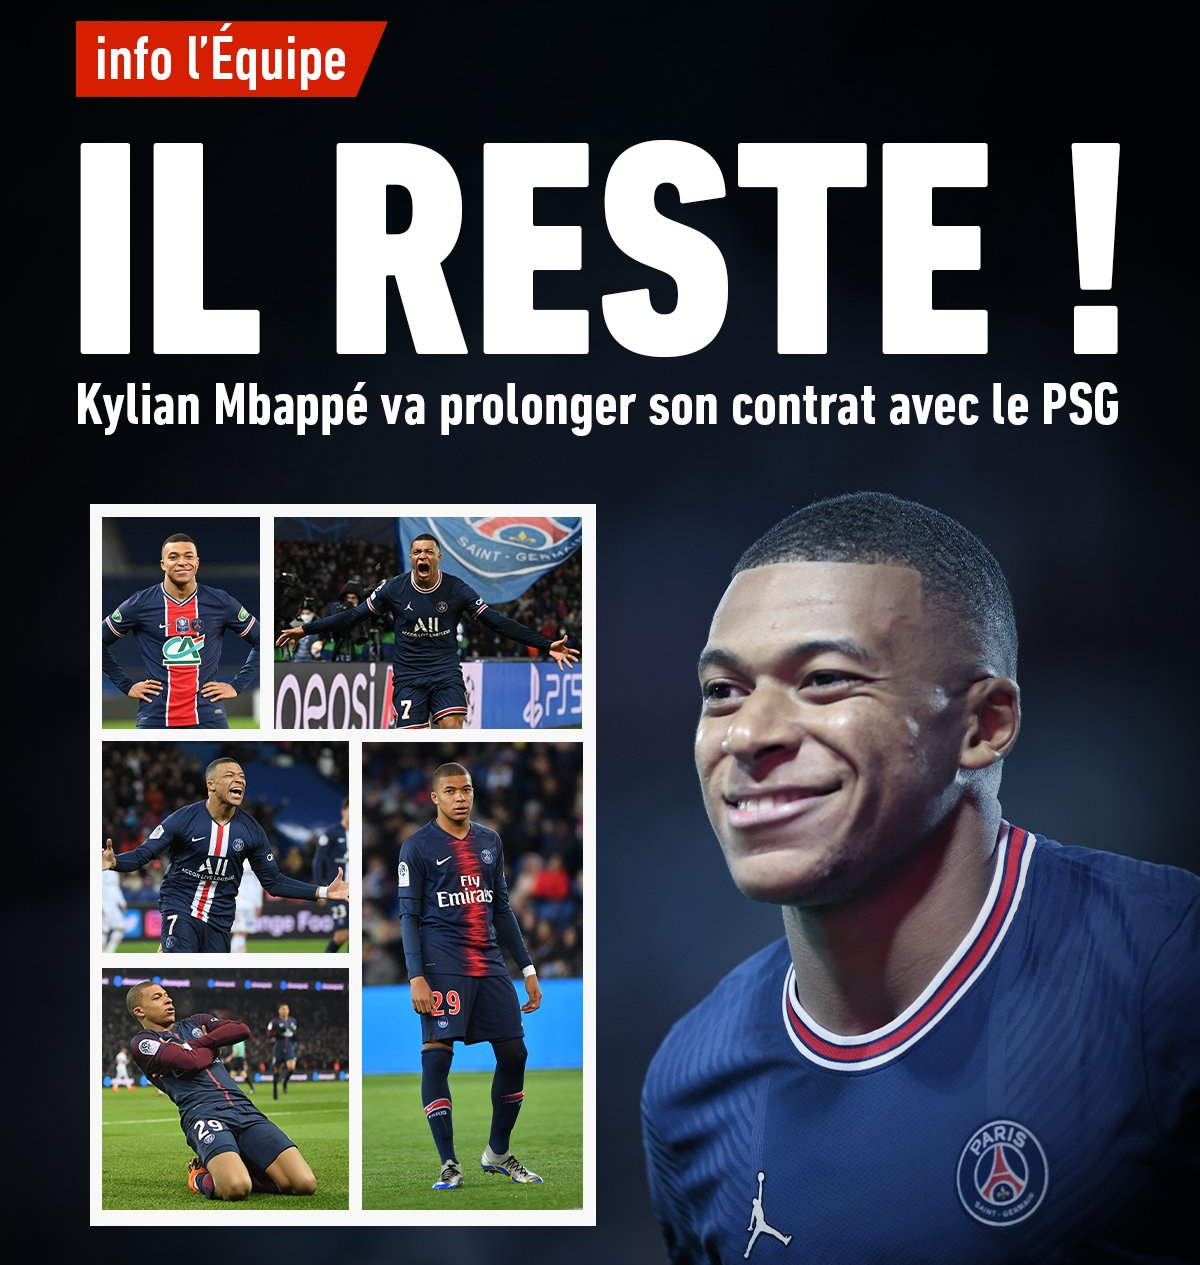 Bonus da 150 milioni di euro per la permanenza di Mbappé al PSG